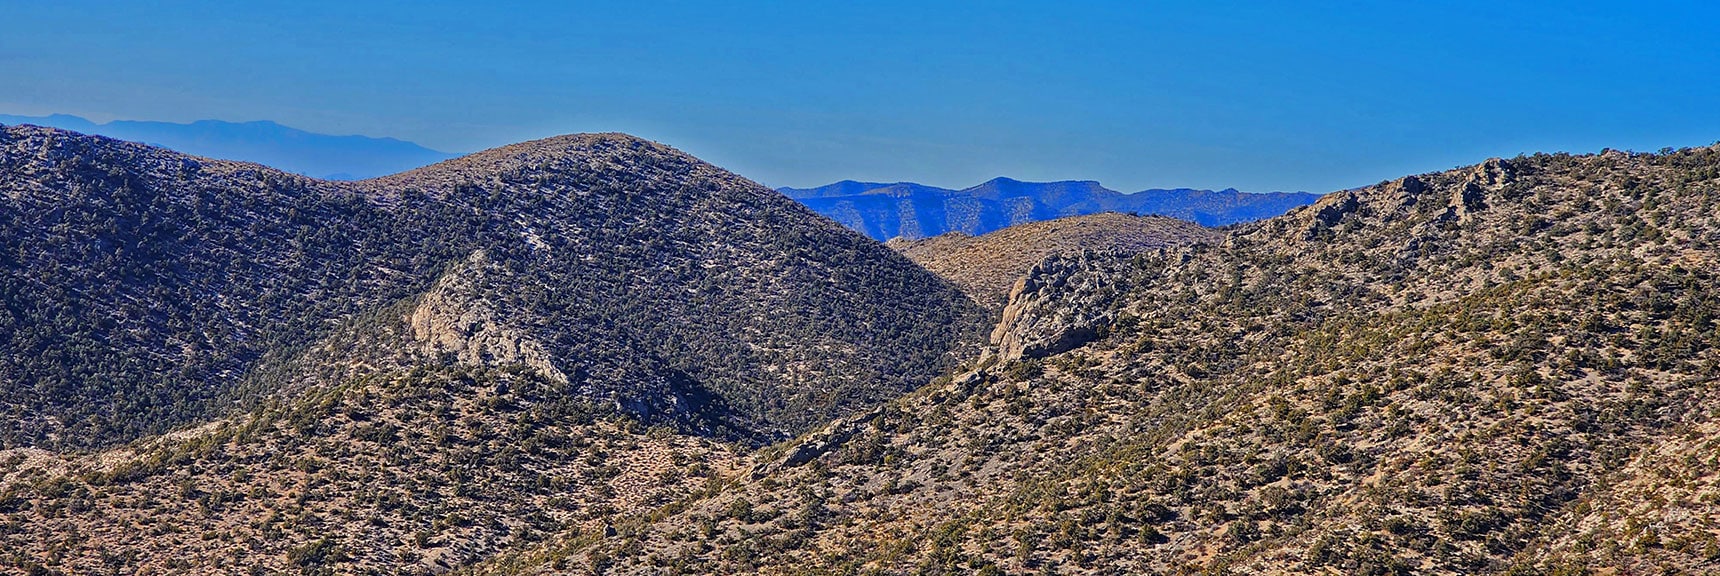 Northwestern View from Ridgeline | Rainbow Mountains Mid Upper Crest Ridgeline from Lovell Canyon, Nevada